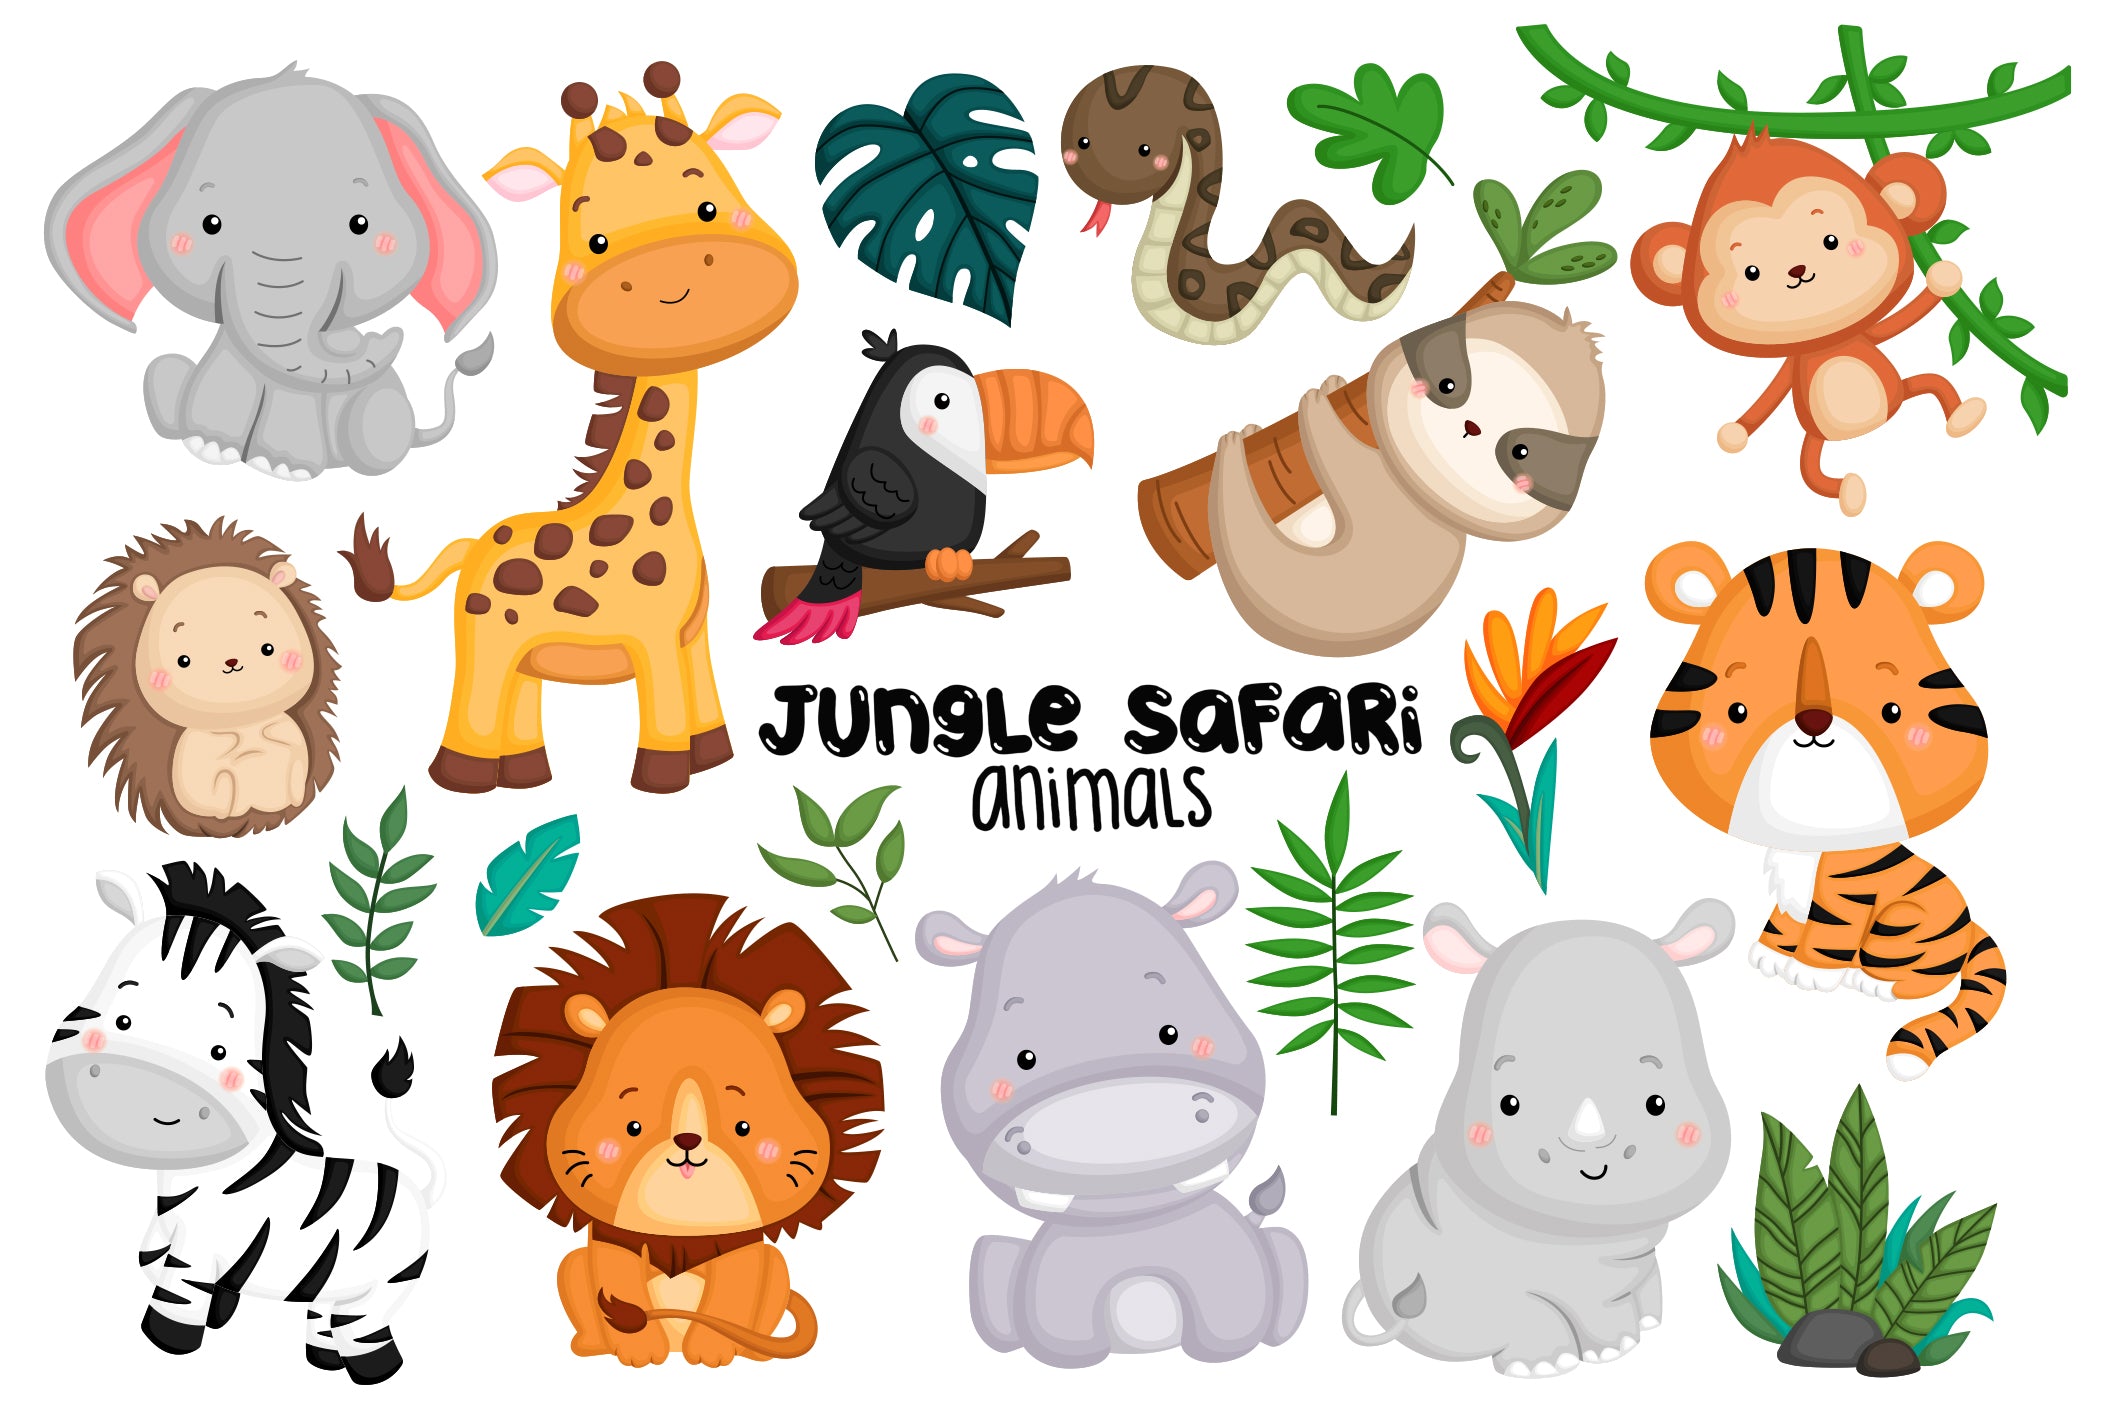 cartoon baby jungle animals clipart